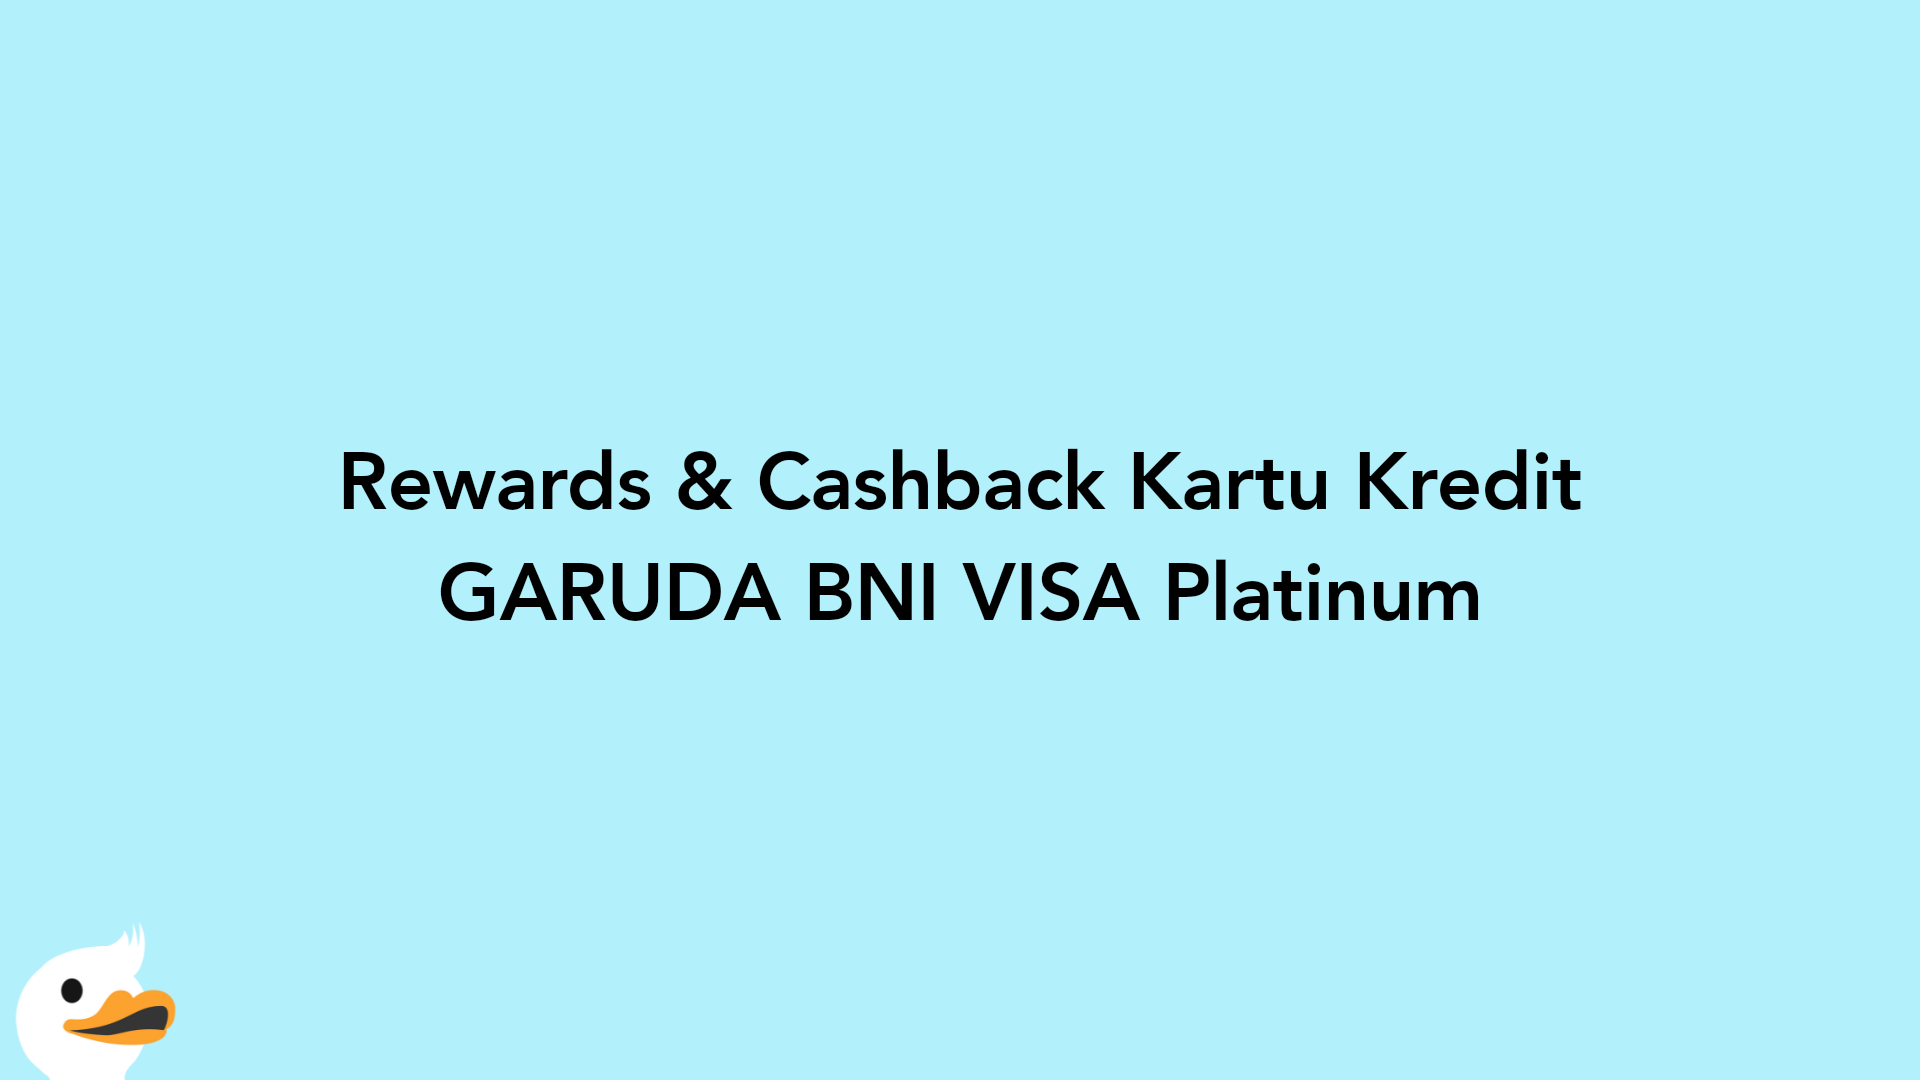 Rewards & Cashback Kartu Kredit GARUDA BNI VISA Platinum